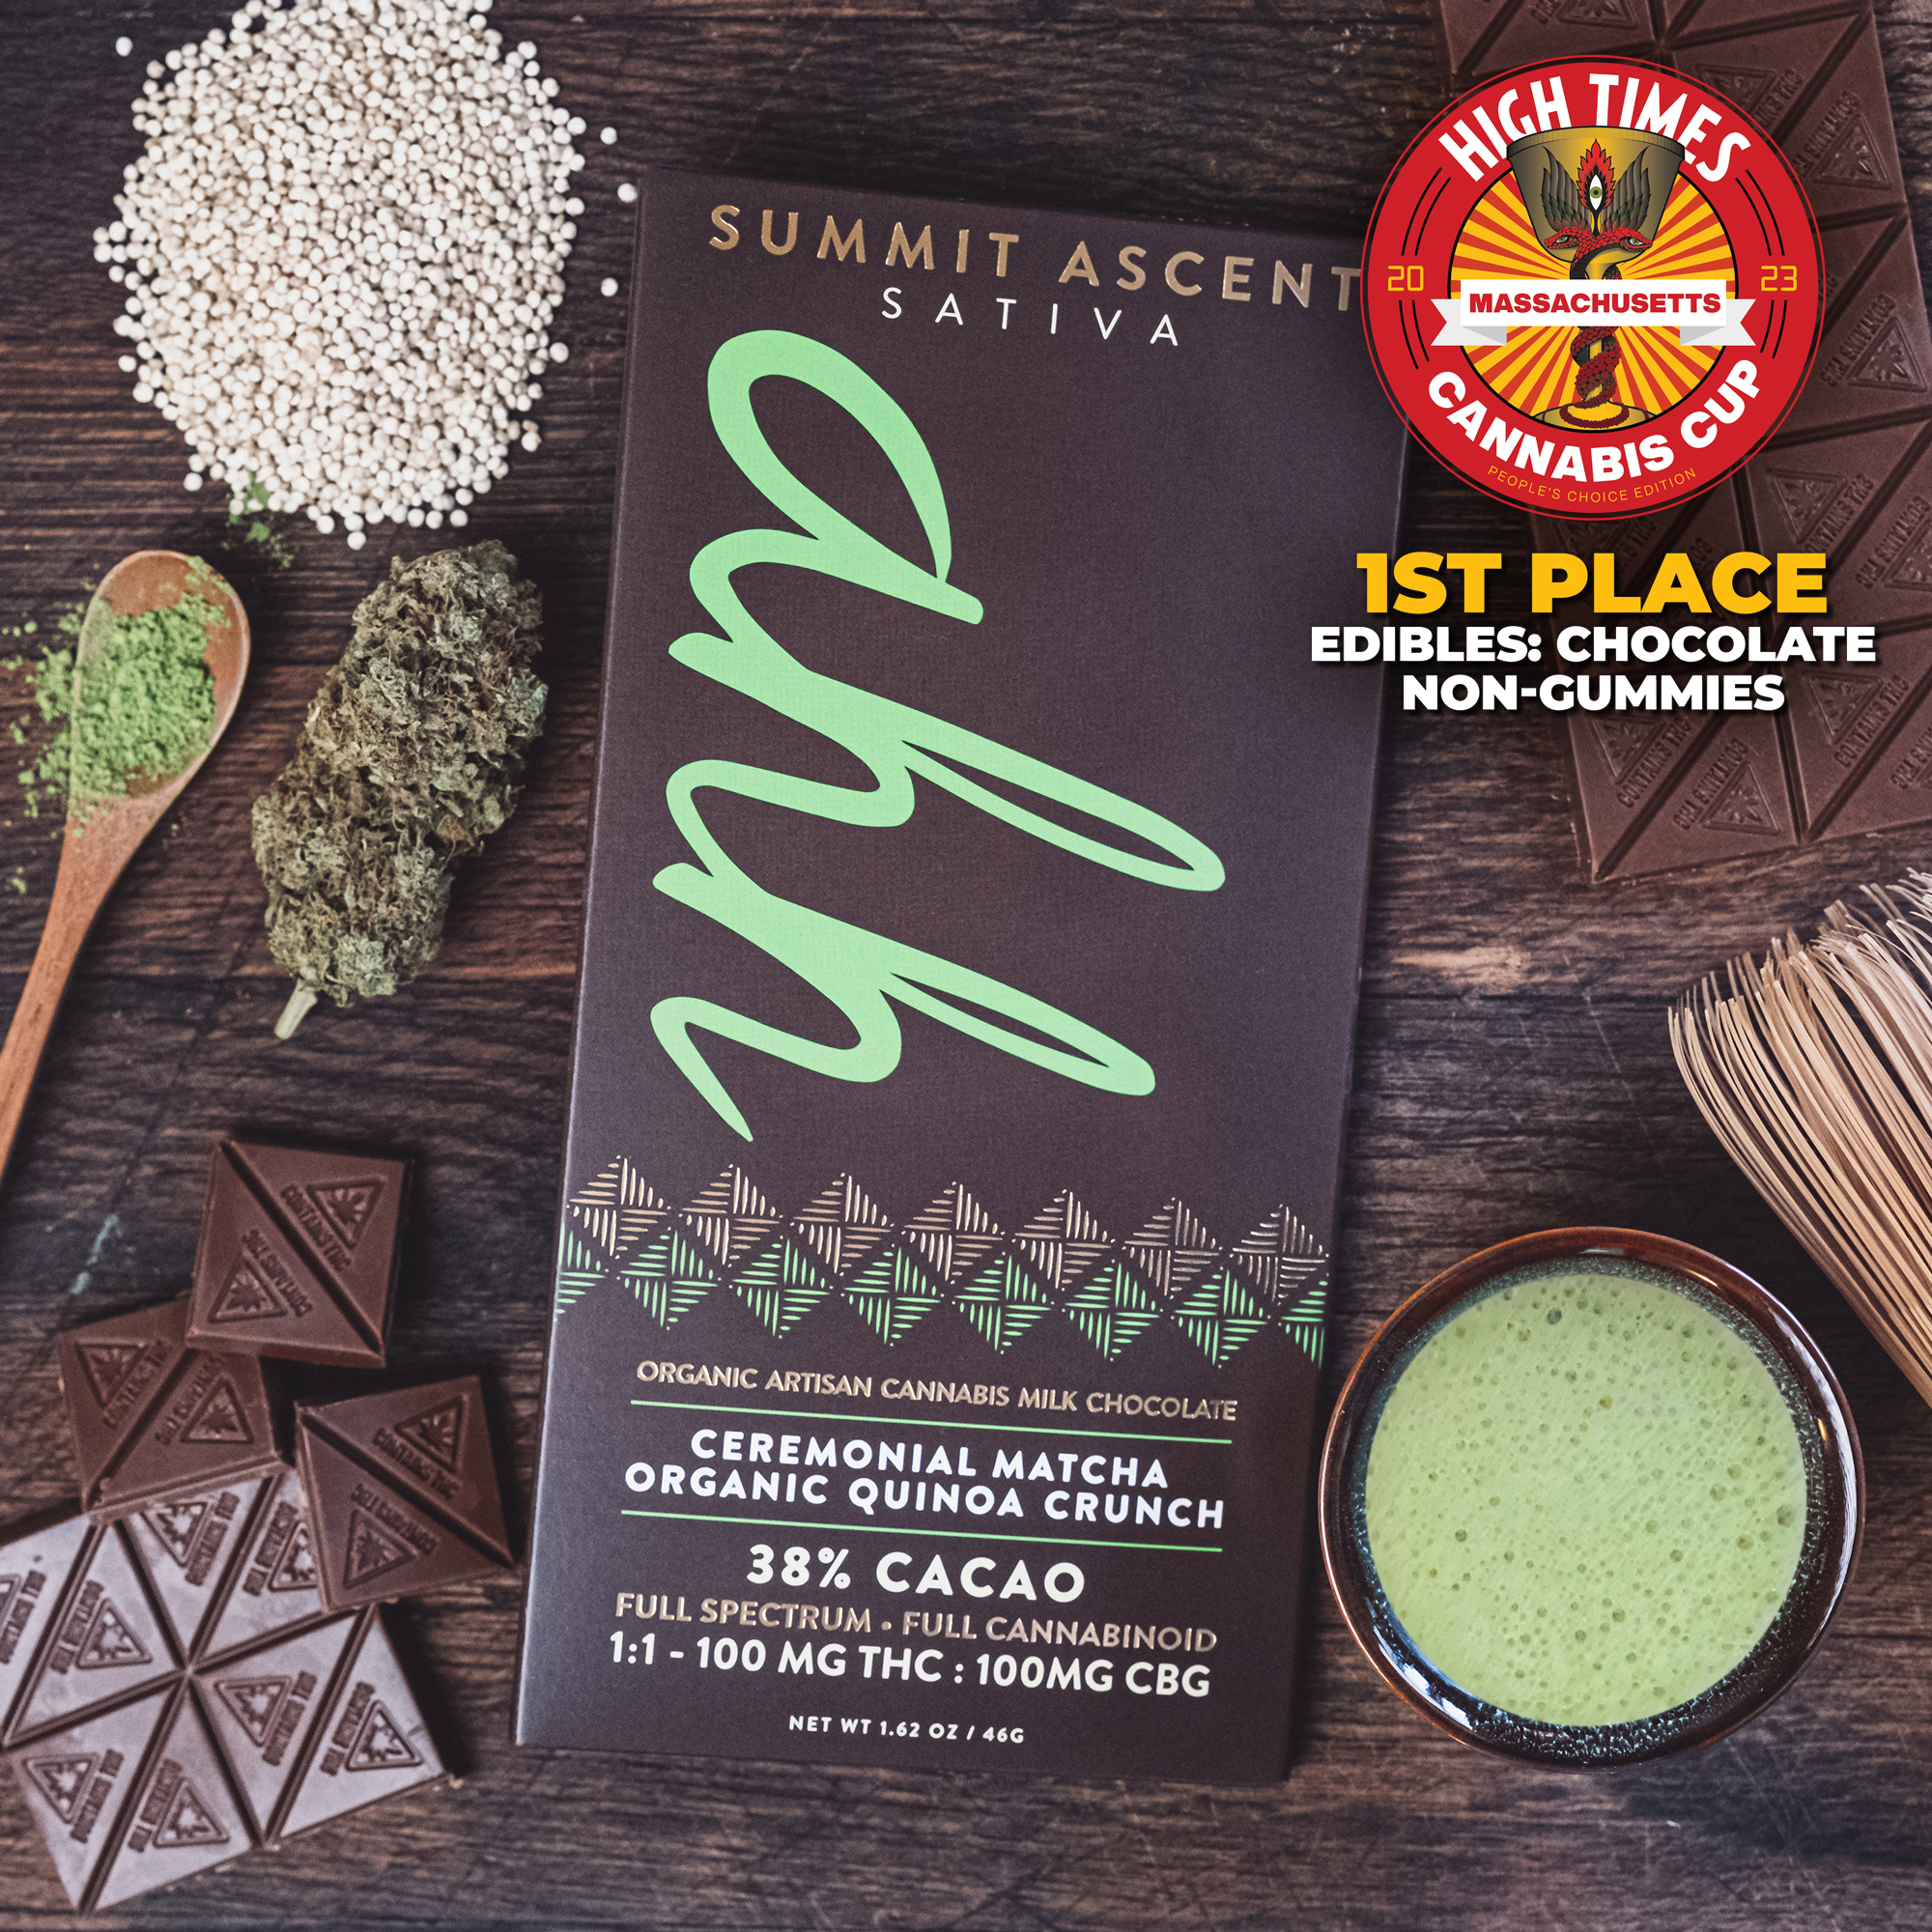 Summit Ascent Sativa, Artisan Cannabis Milk Chocolate: High Times Award-Winning First Place: Edibles Chocolate Non-Gummies, High Times Cannabis Cup Massachusetts